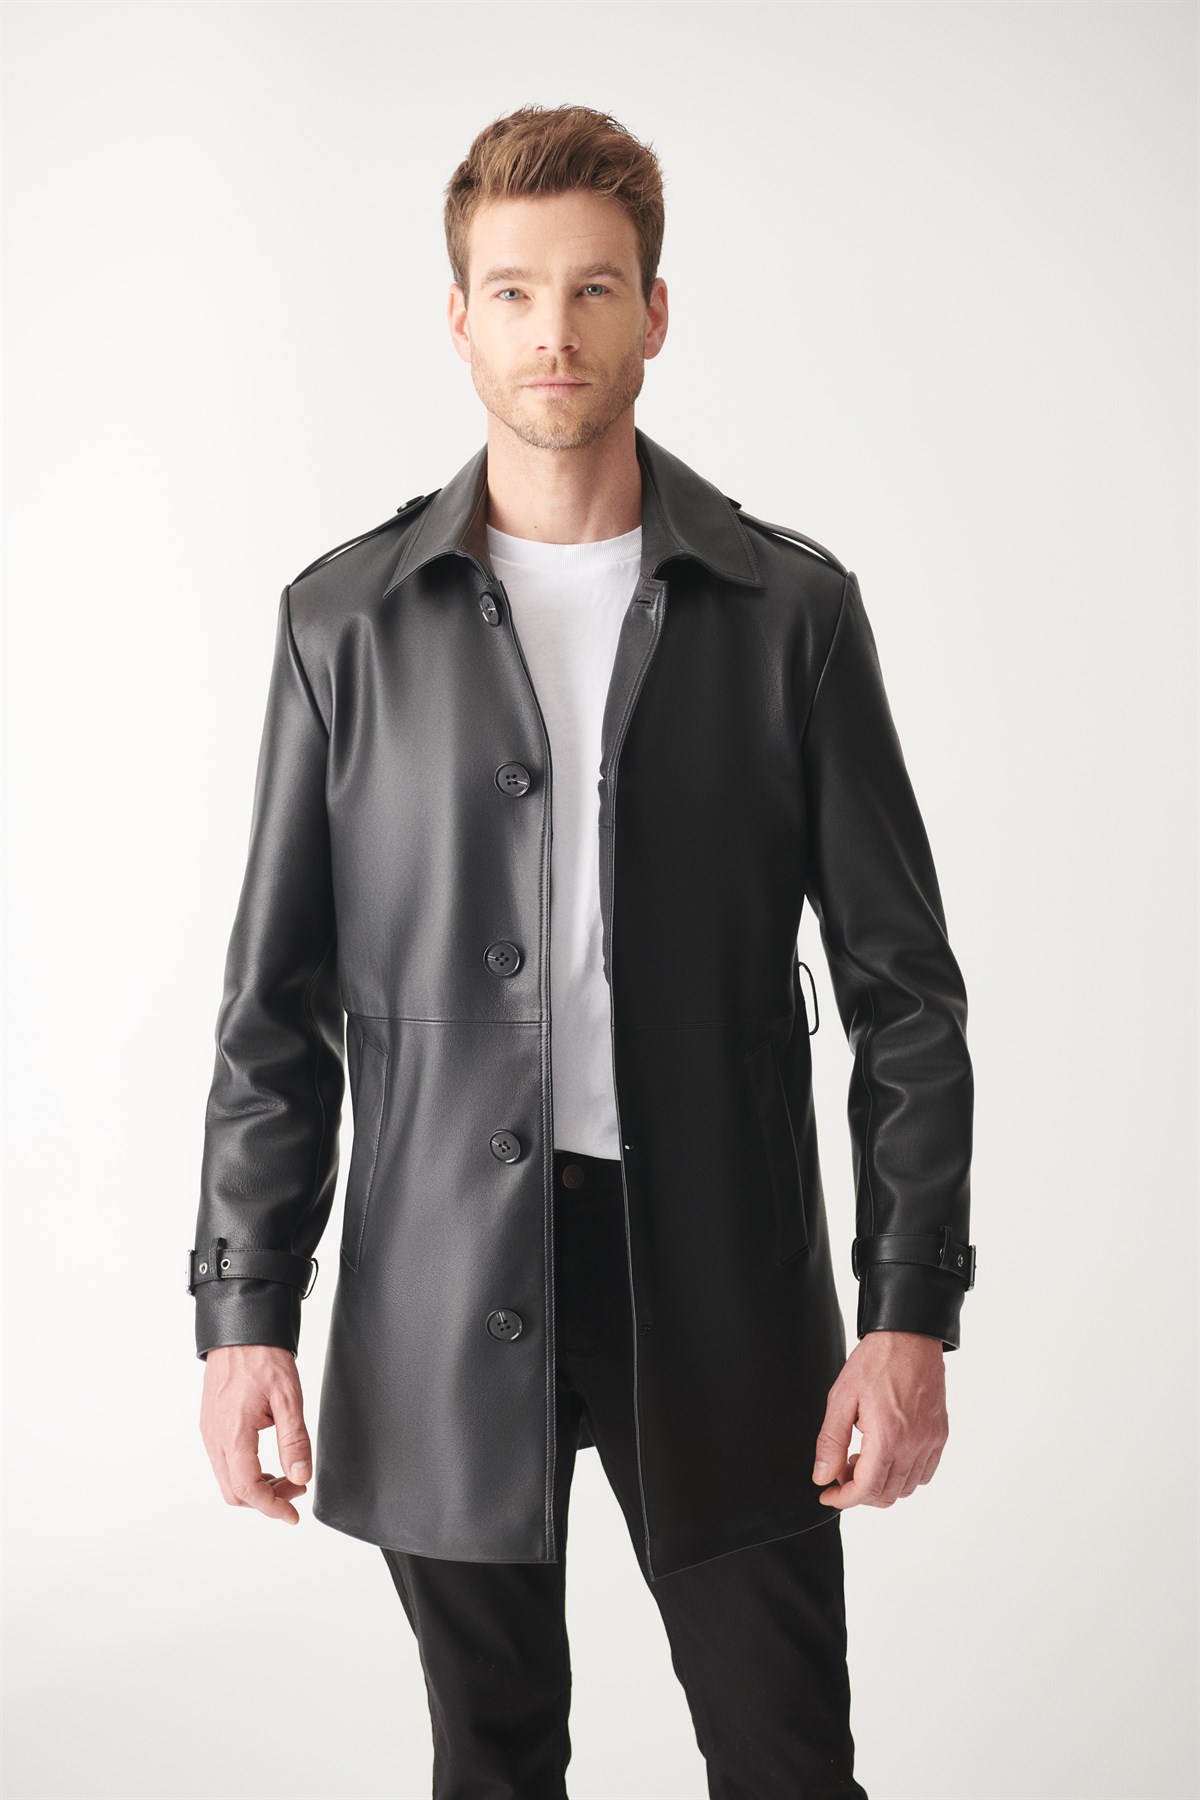 BRIAN Black Trench Coat Leather Coat | Men's Leather Jacket Models